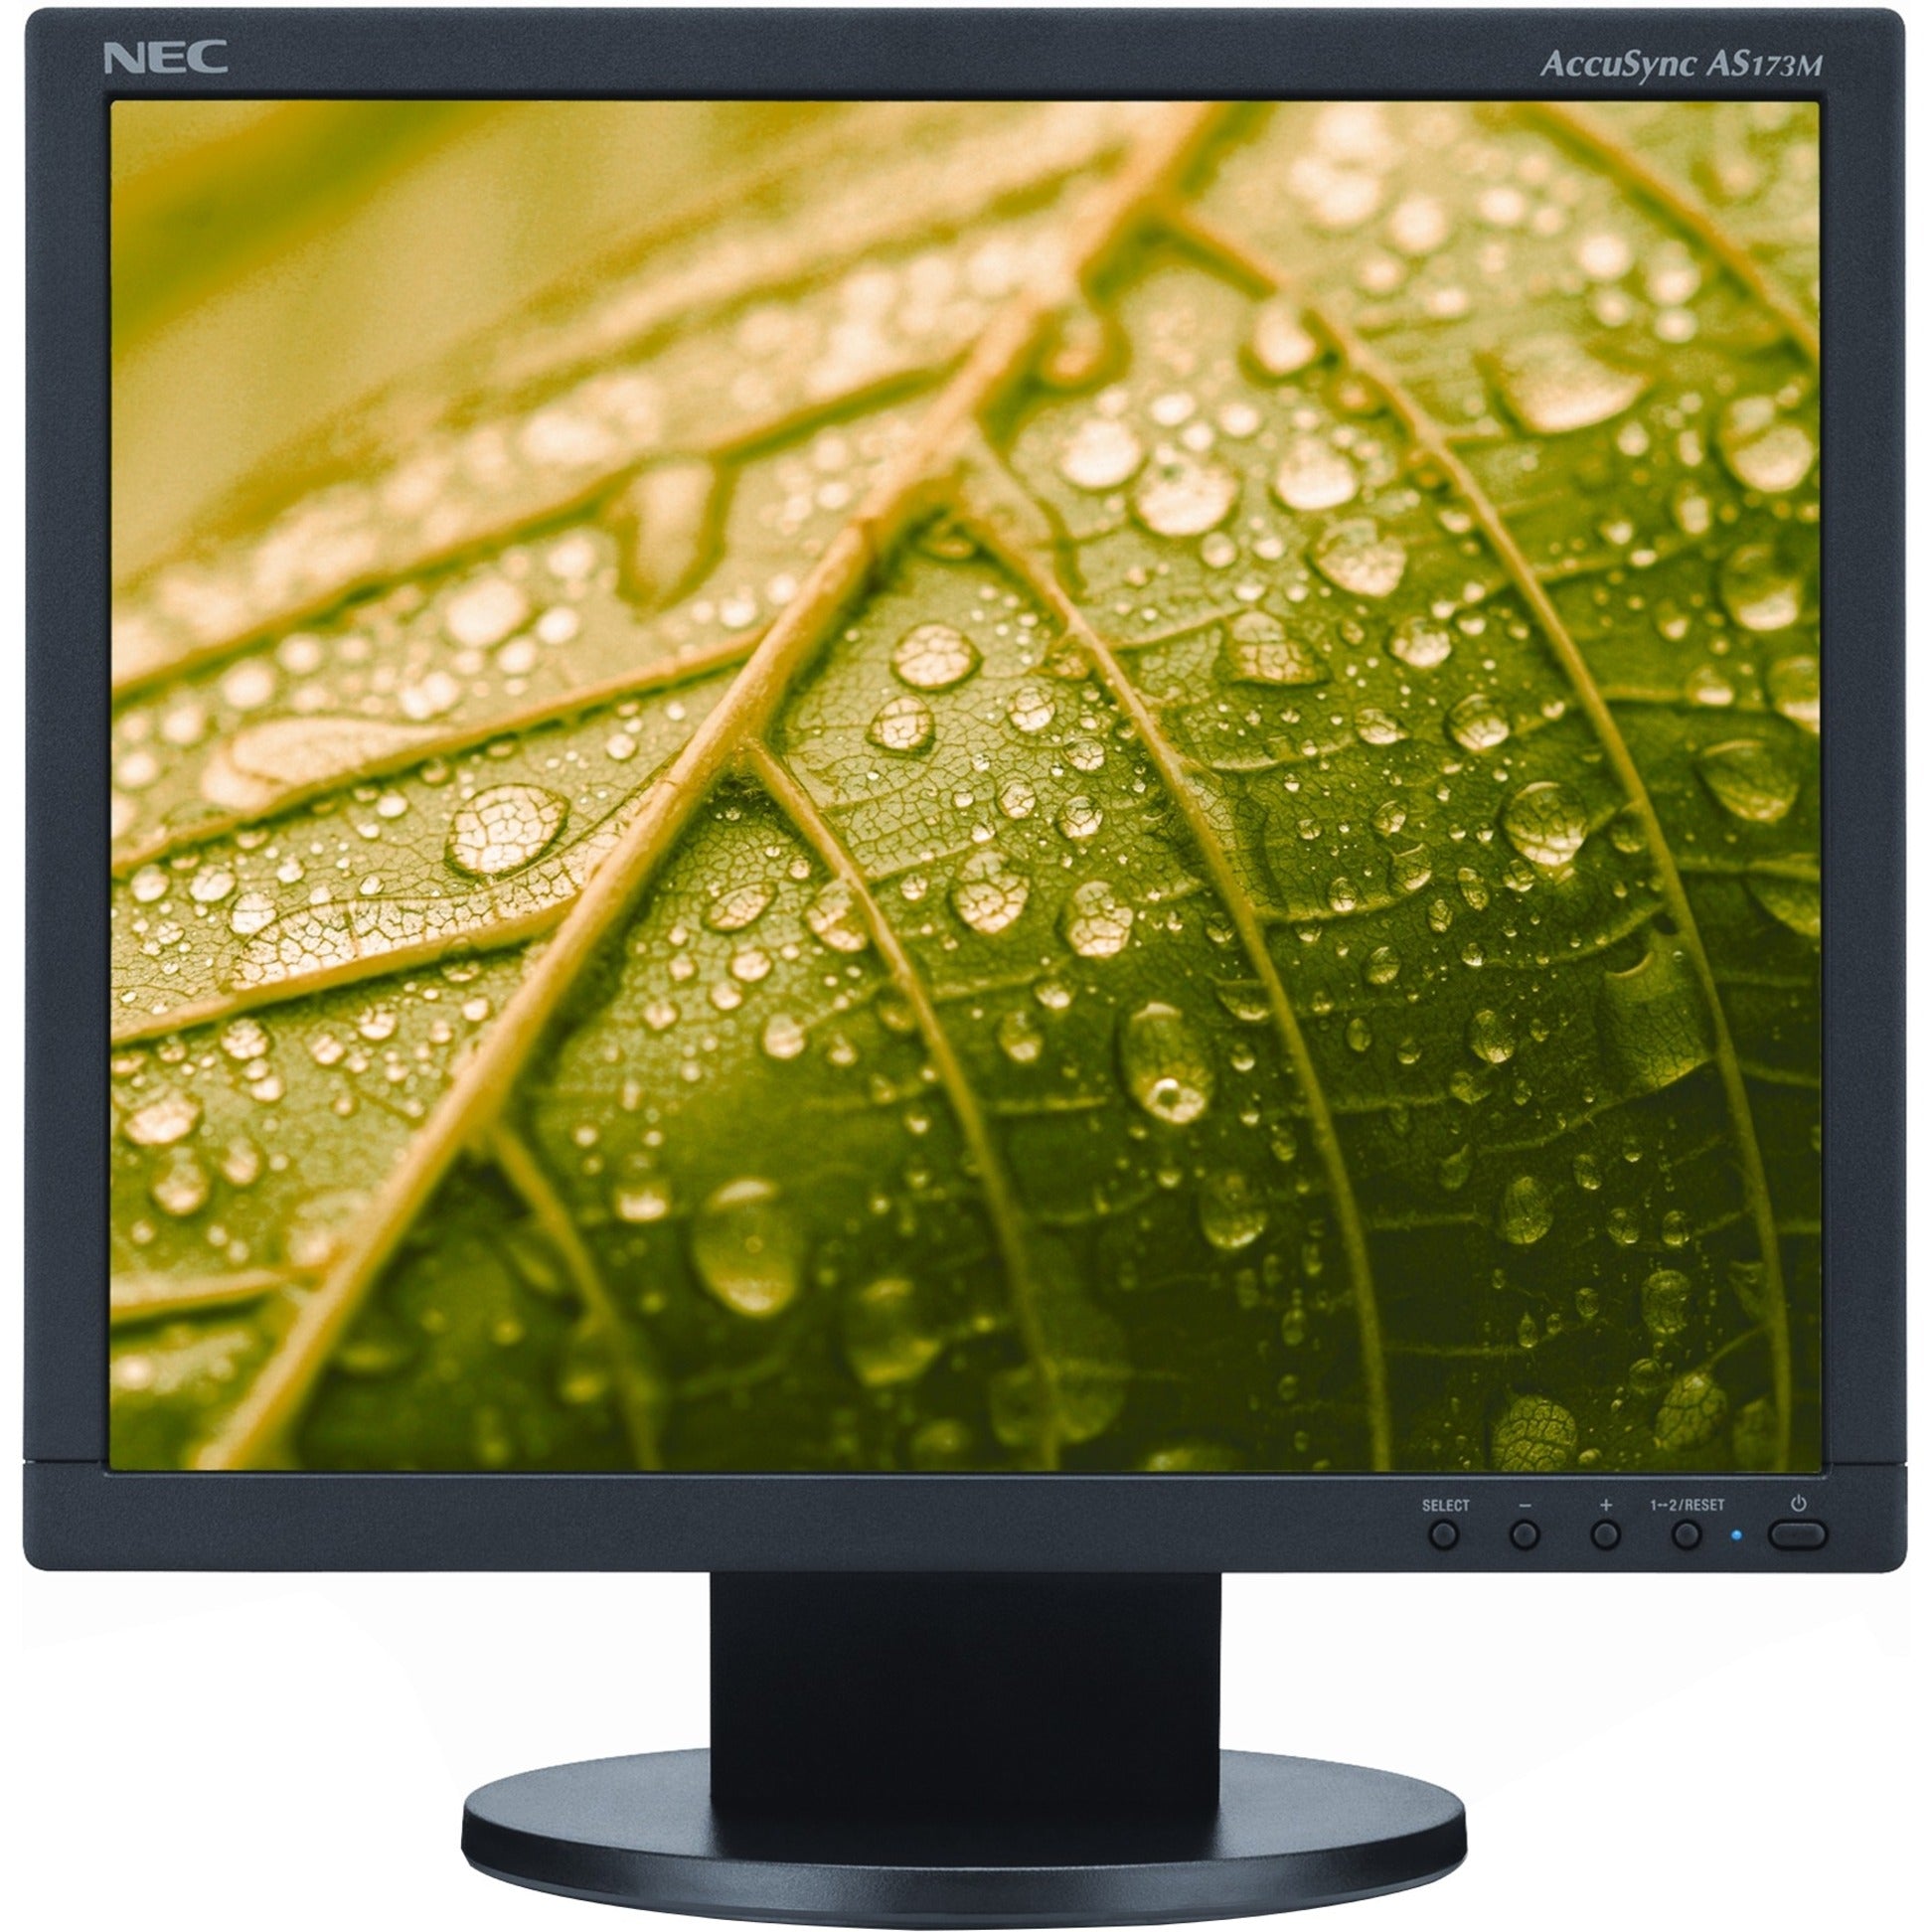 NEC Display AS173M-BK AccuSync 17 LCD Monitor, LED Backlighting, 1280 x 1024, 5:4